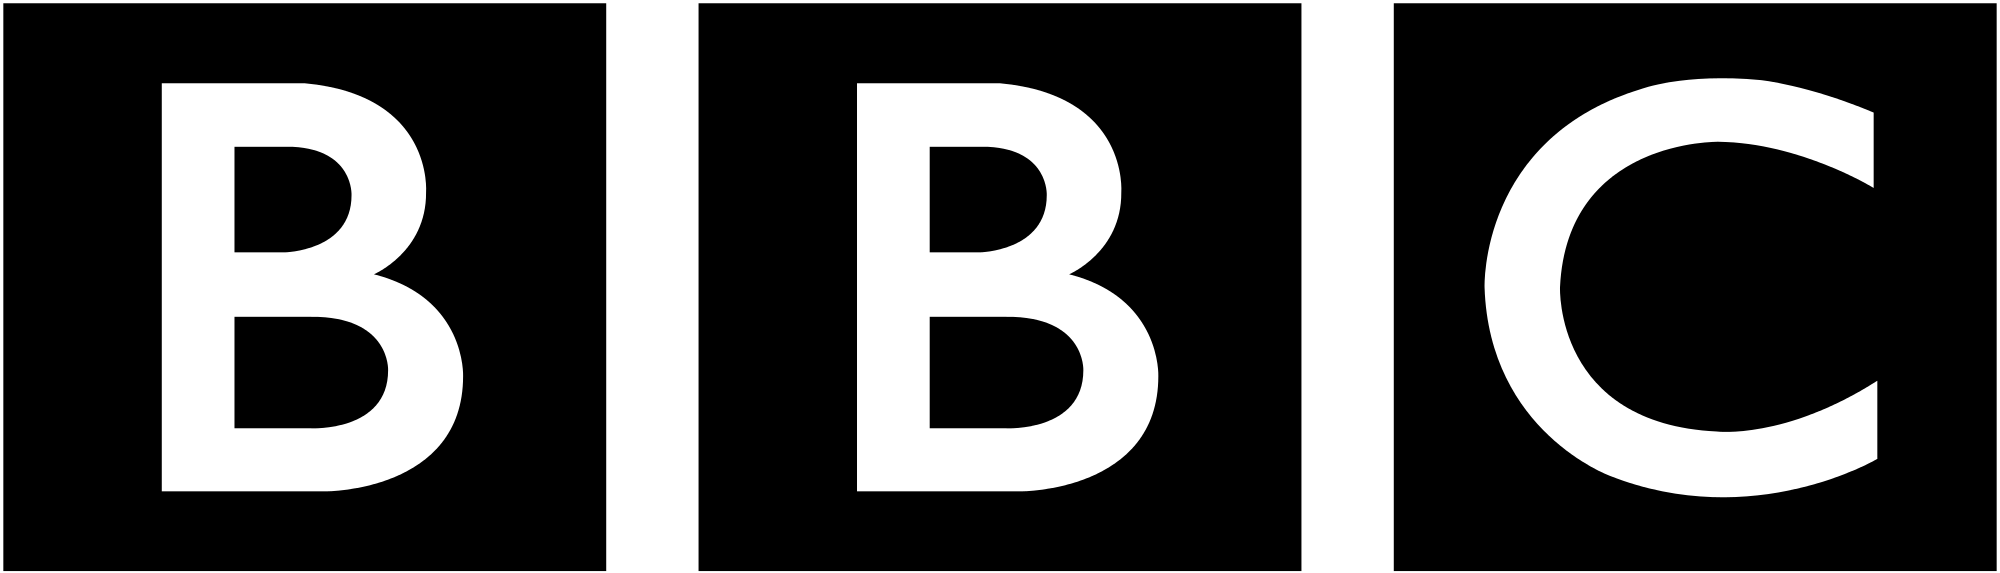 Bbc Logo Png Images, Free Tra